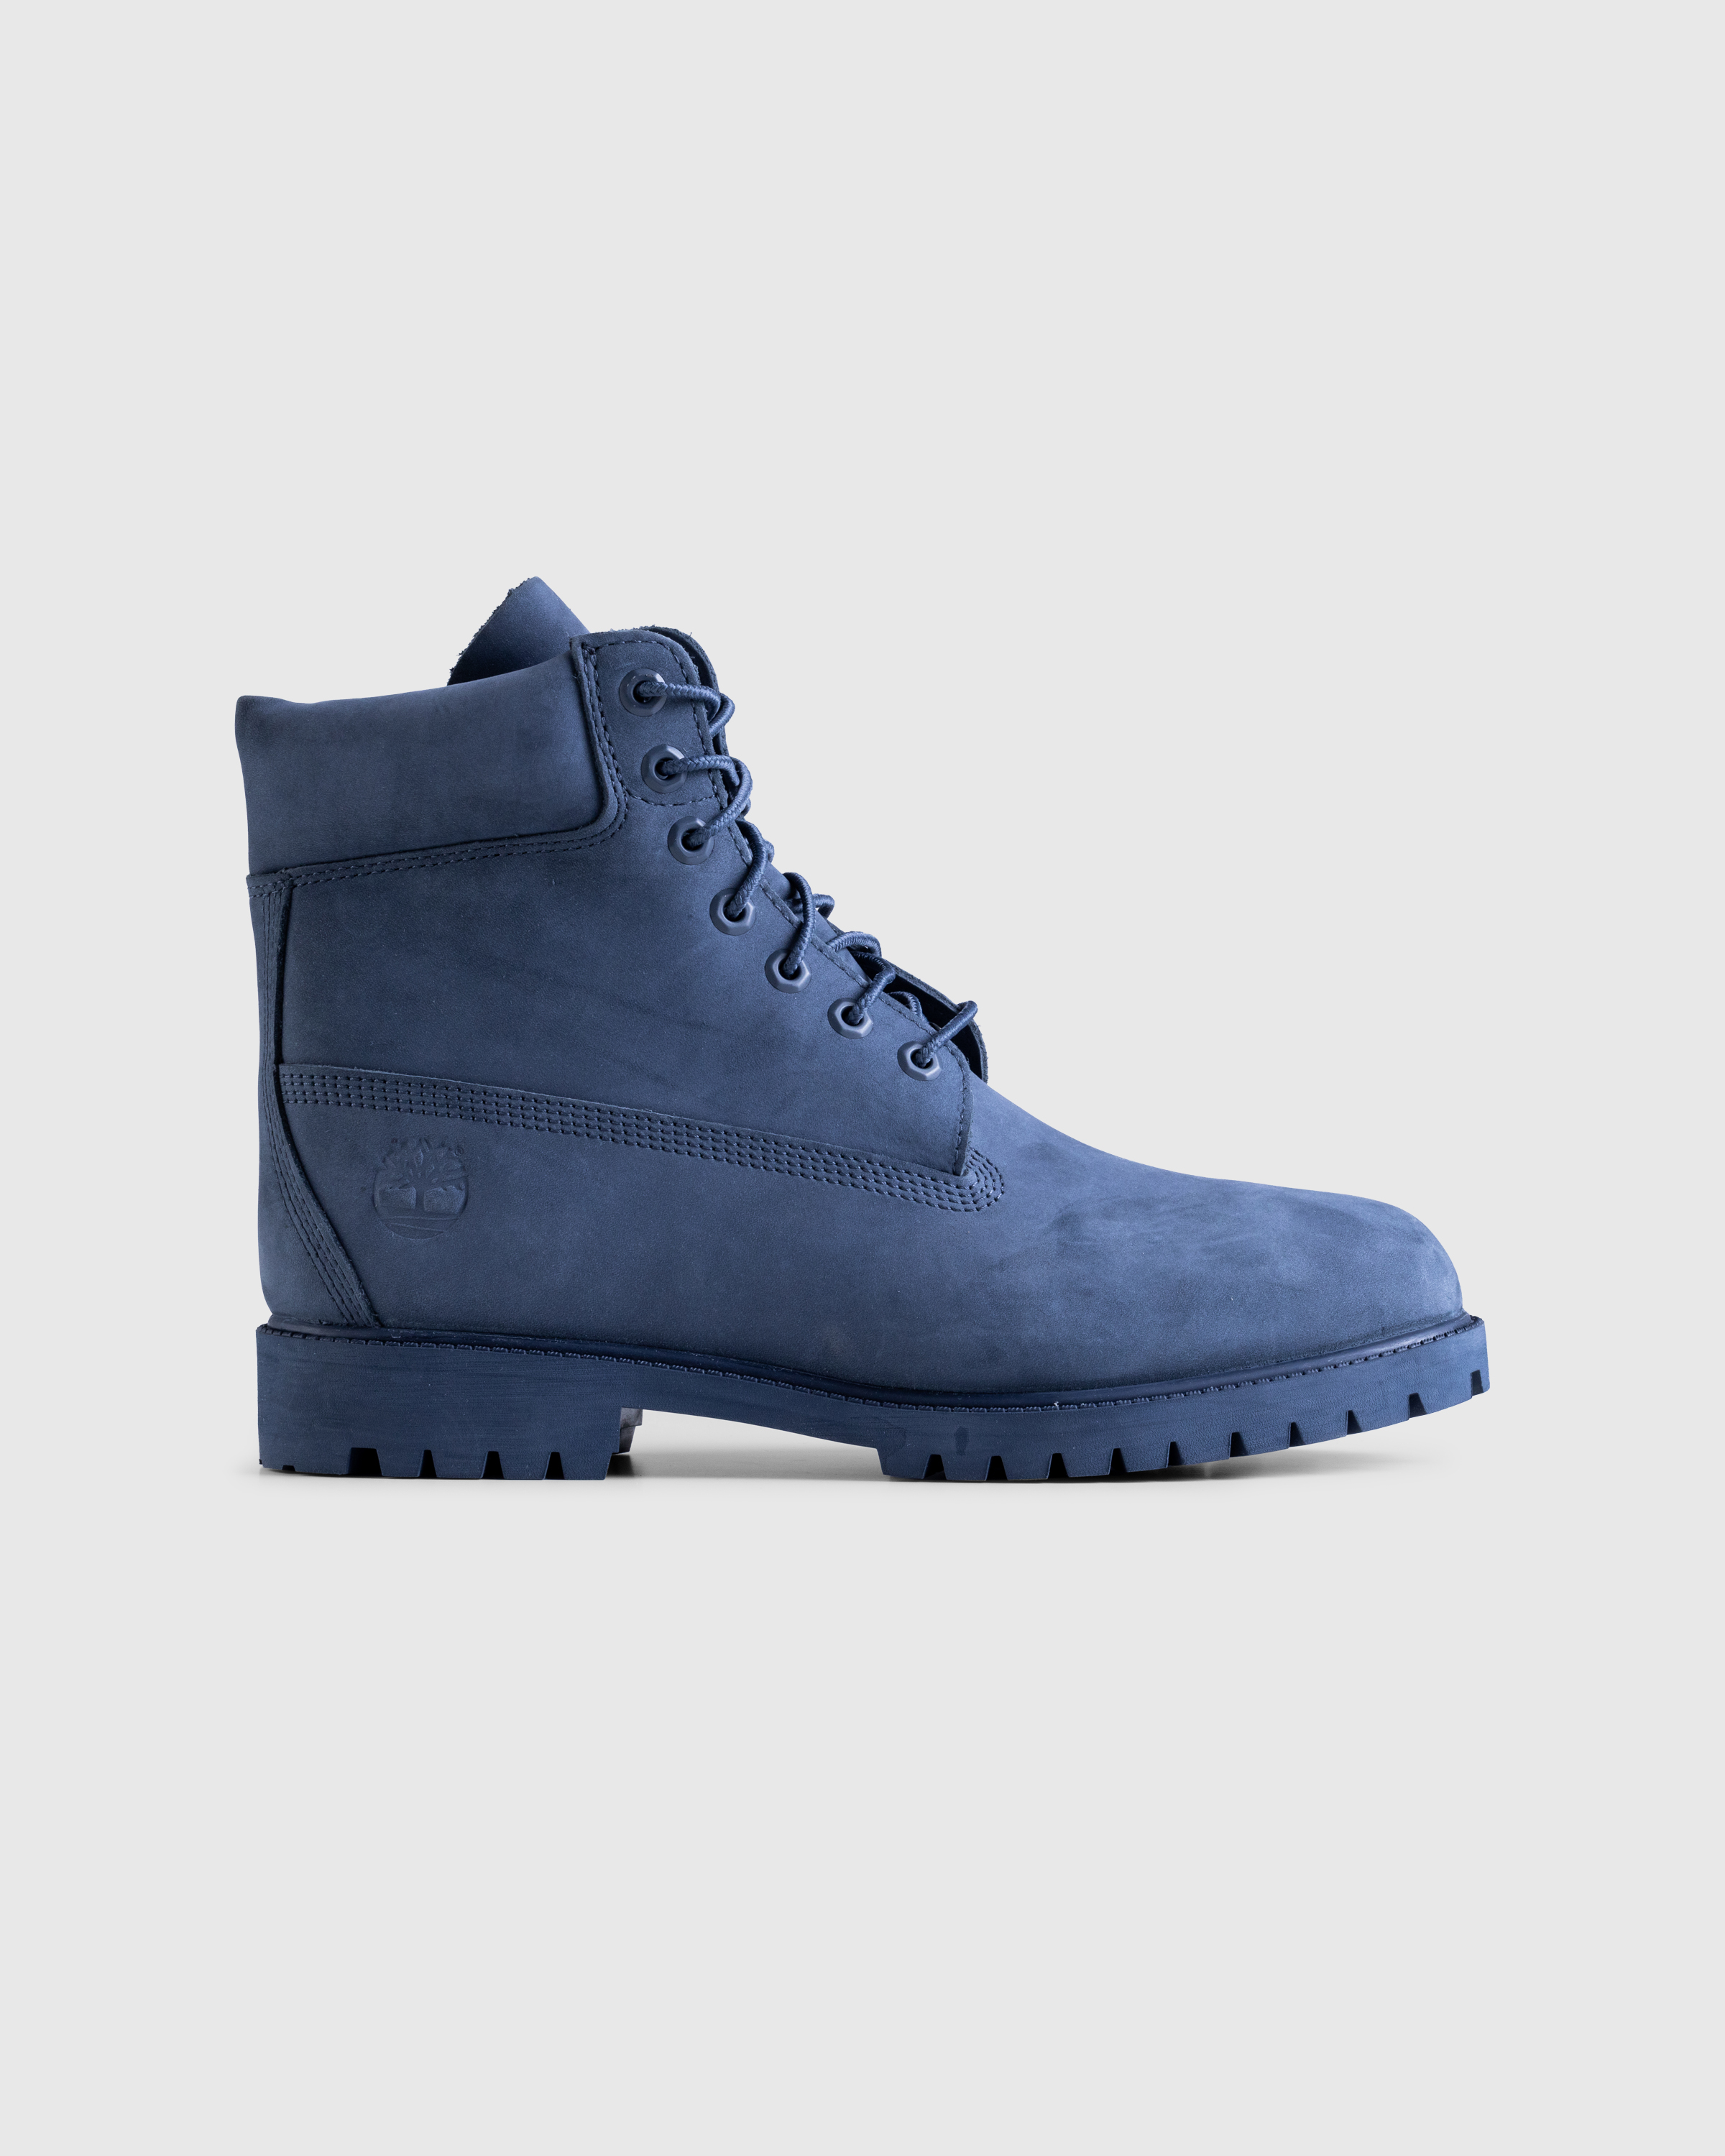 Timberland – Heritage 6-Inch Boot Dark Blue Nubuck - Boots - Blue - Image 1